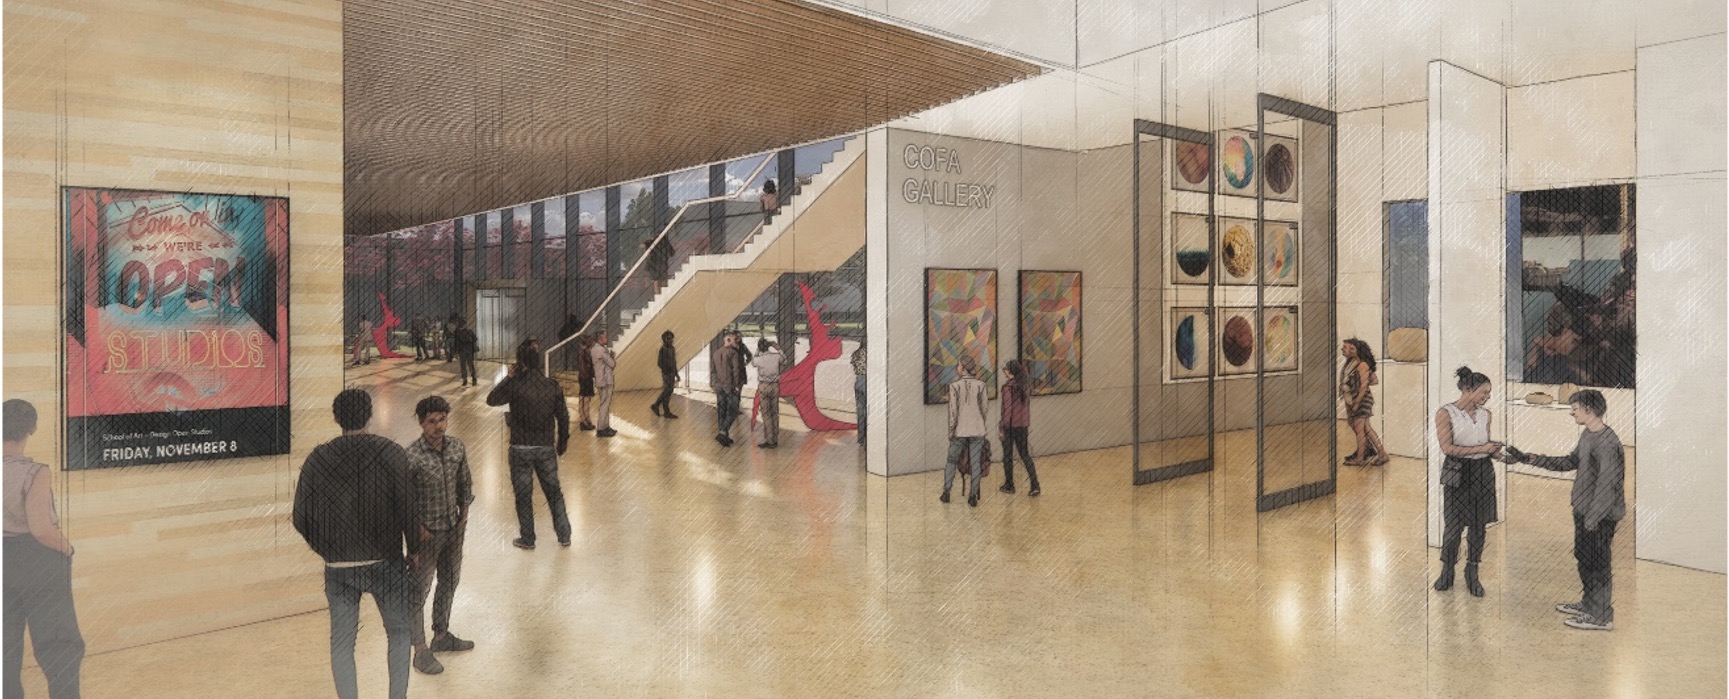 Patton Arts Center Lobby rendering